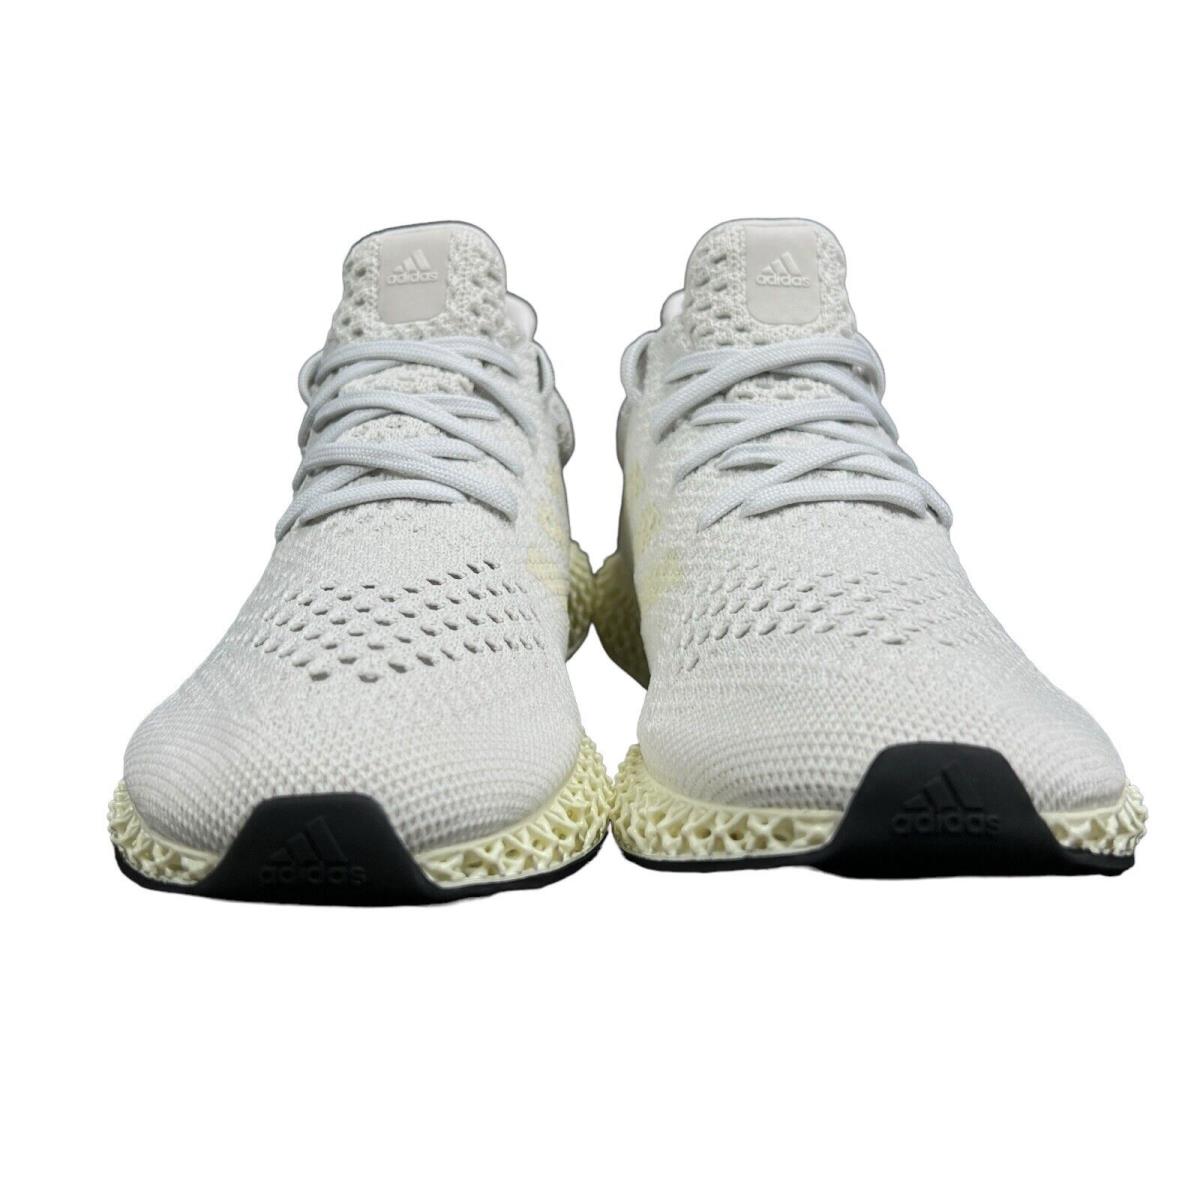 Adidas 4D Futurecraft Chalk White Running Shoes Q46229 Men`s Sz 8 Women`s Sz 9